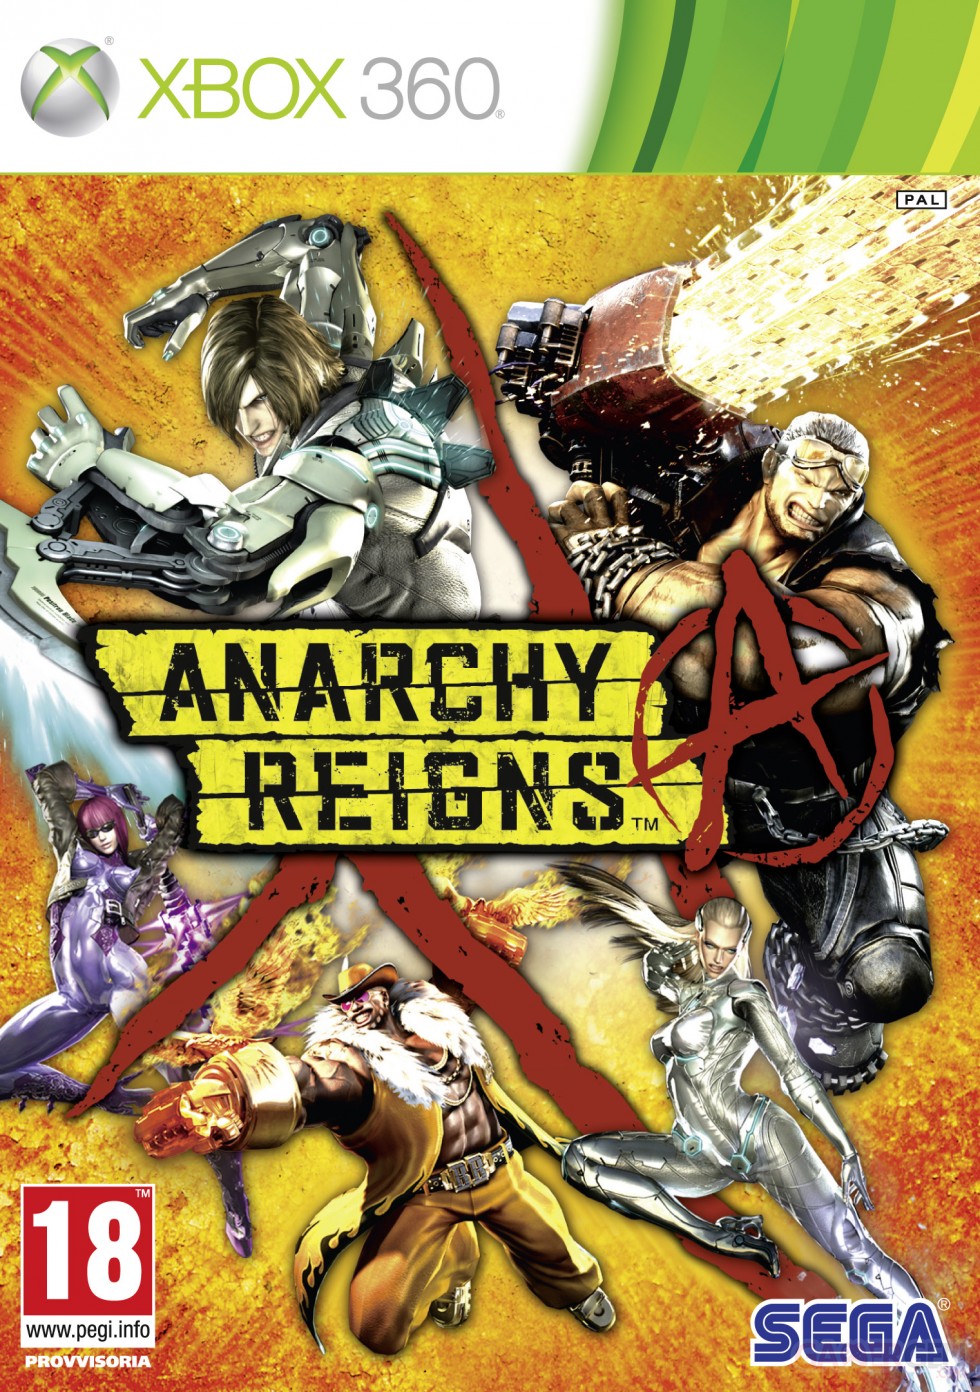 Anarchy-Reigns_2011_08-16-11_008